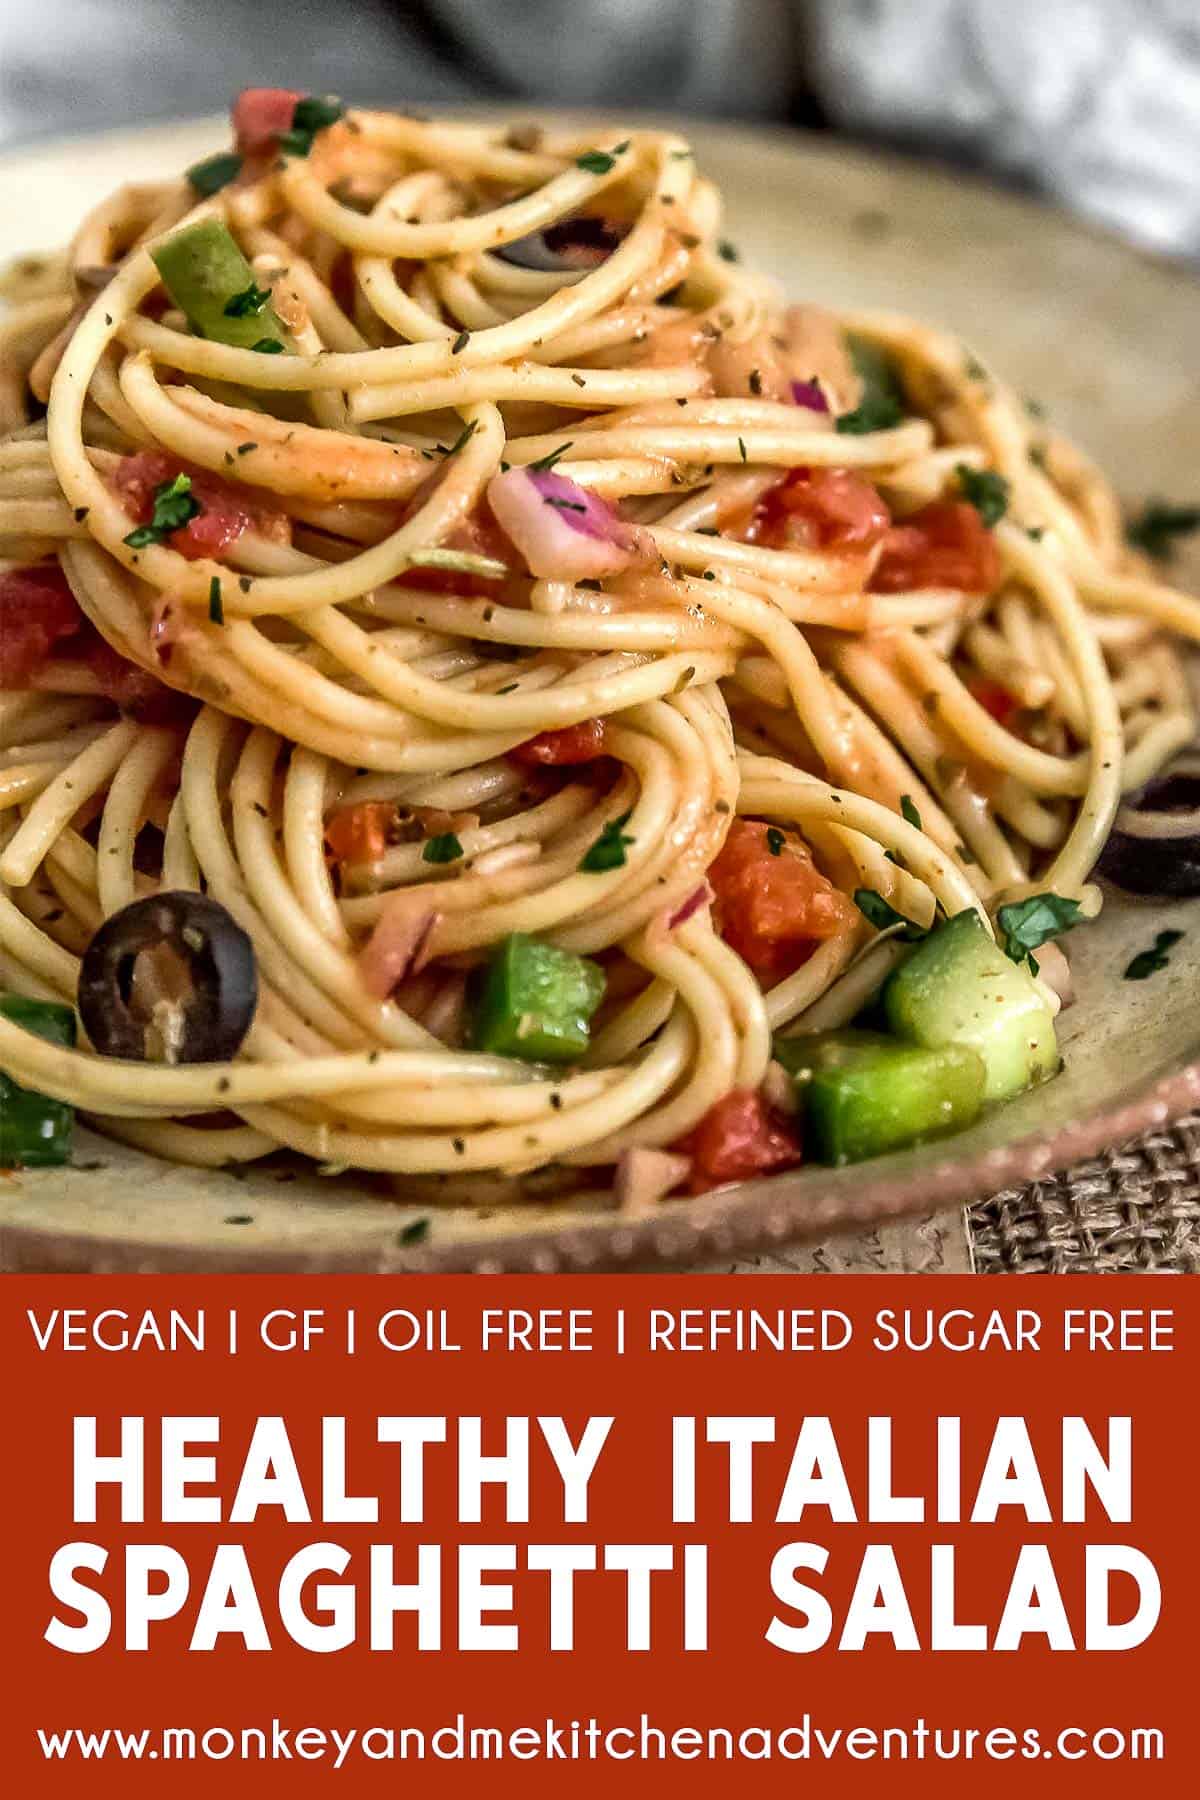 Healthy Italian Spaghetti Salad with text description